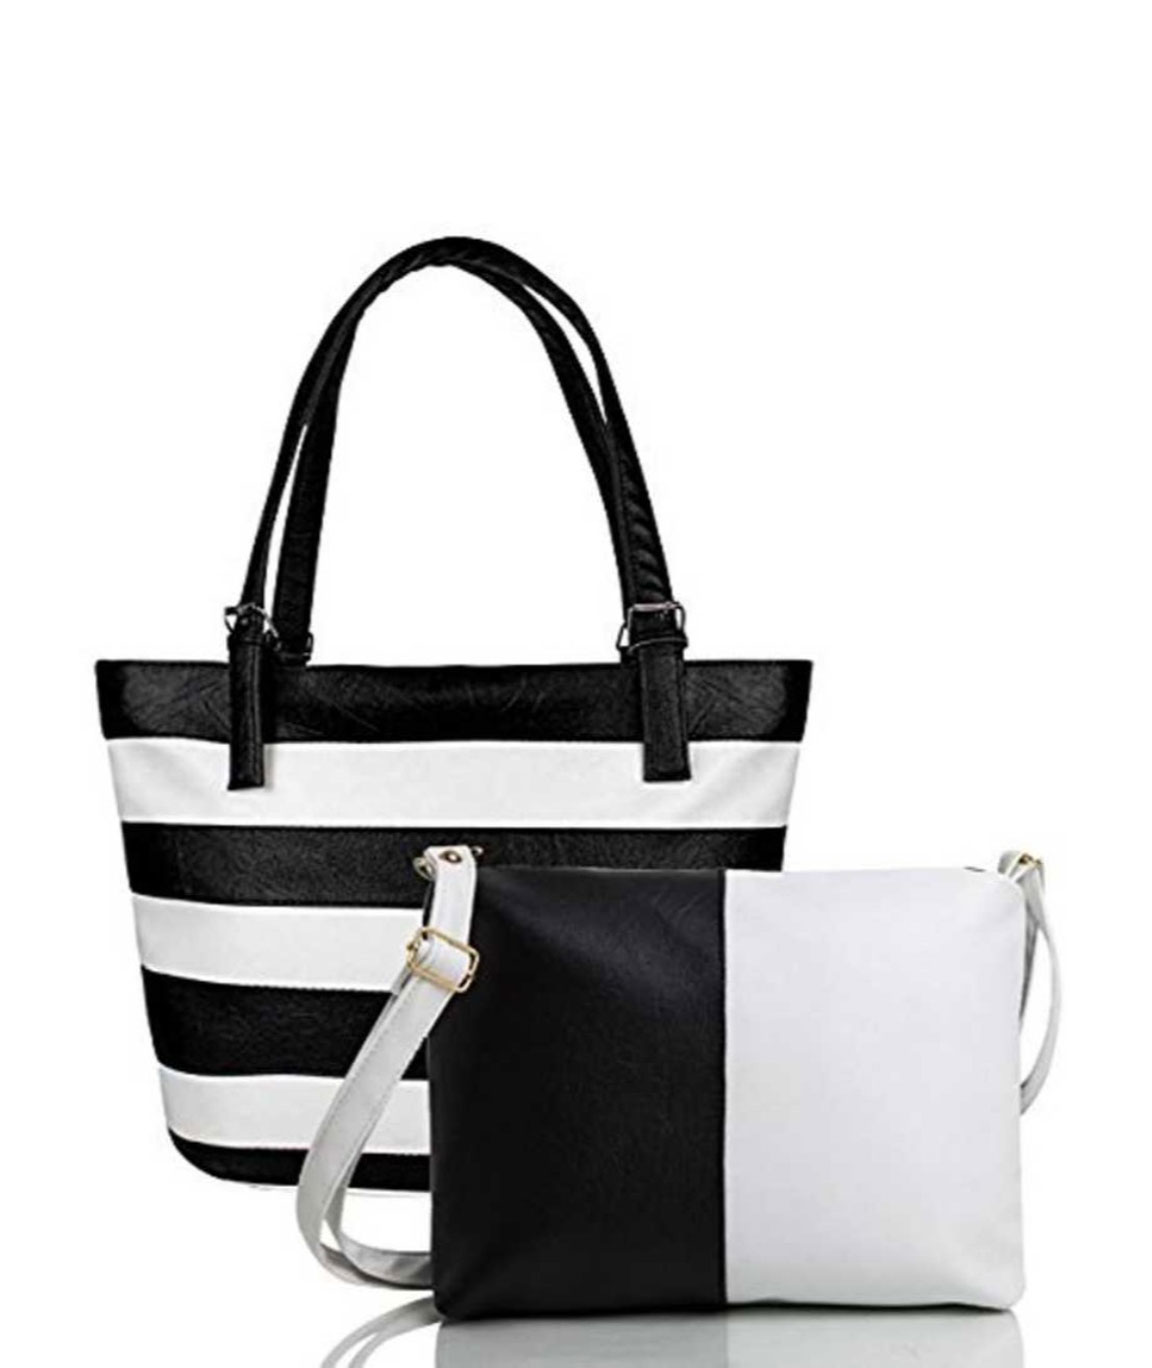 Buy HERCRAFT Women's Handbag With Sling Bag & Wristlet (Set of 3)  (HC-003A2,Beige) at Amazon.in